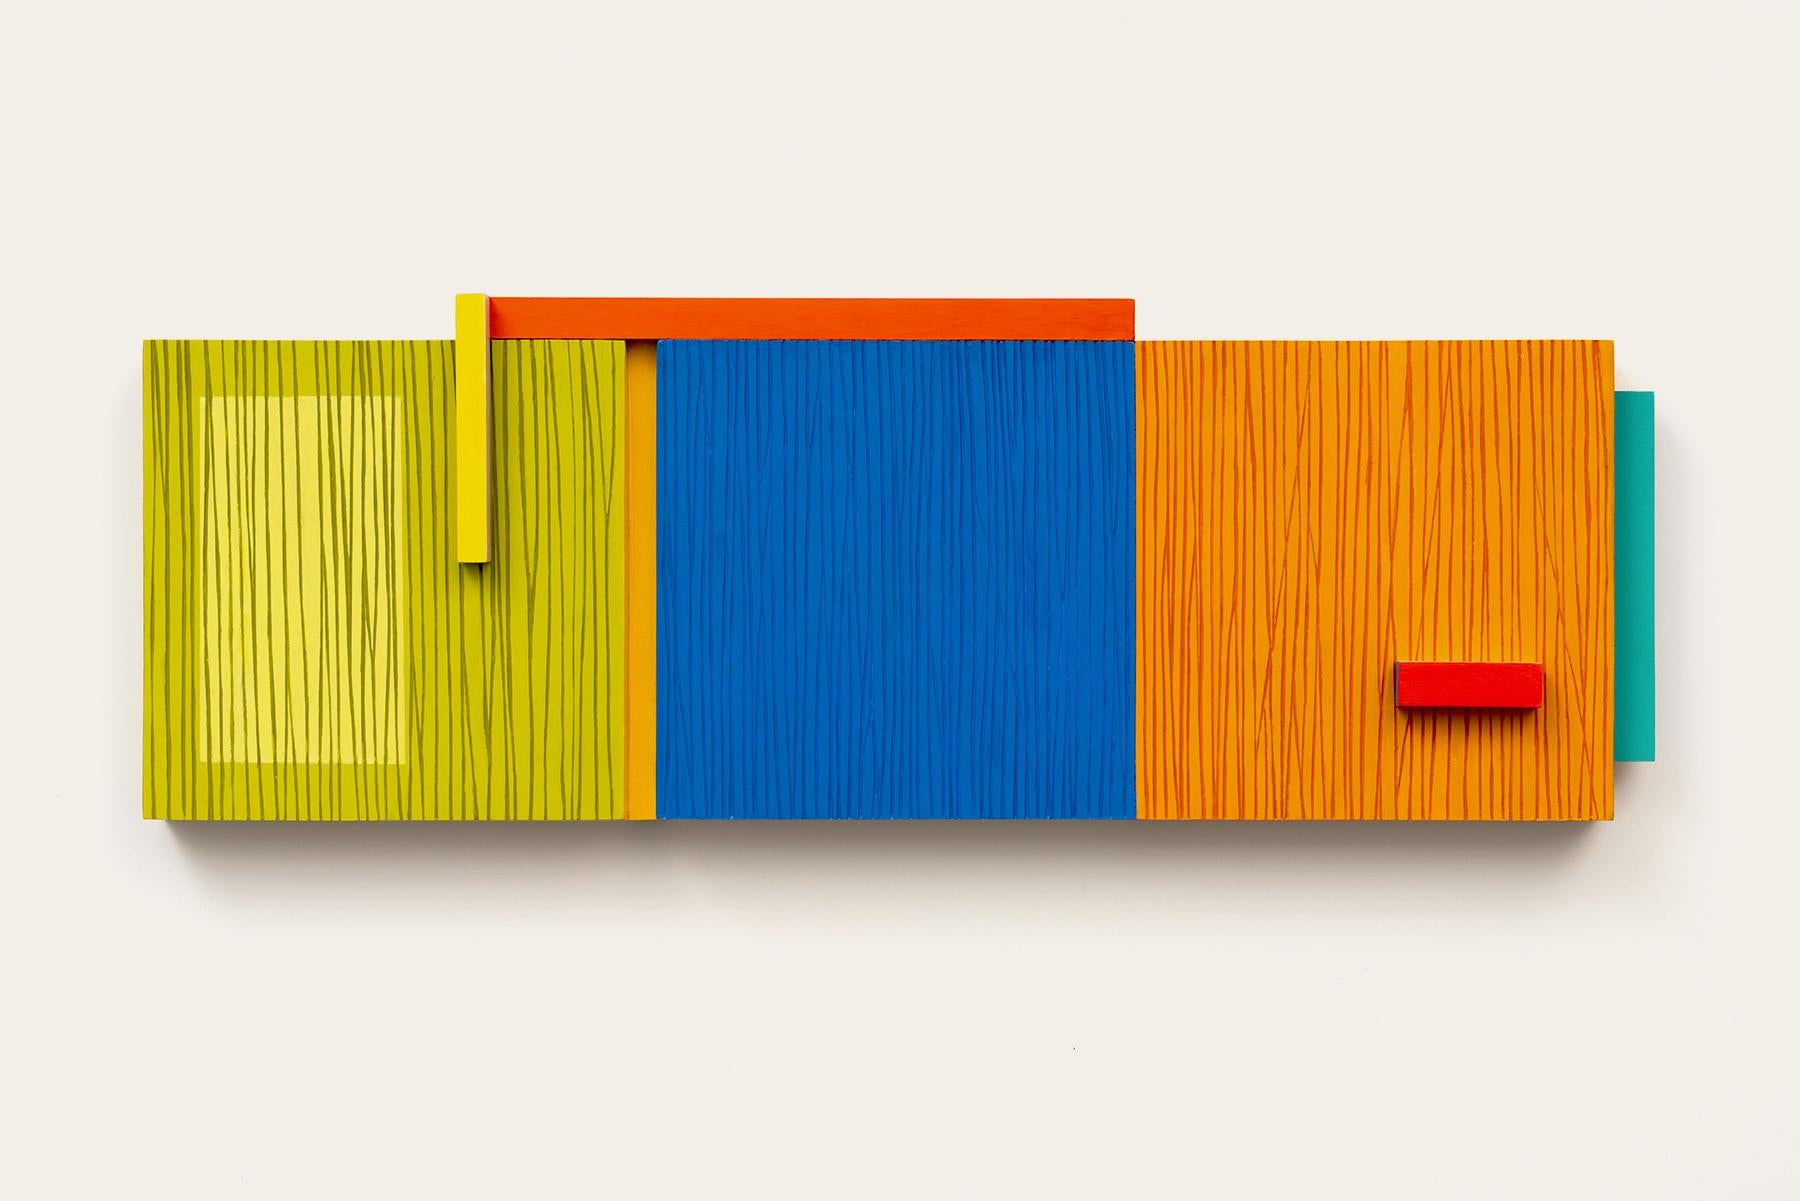 Toutes inclusives - Sculpture murale abstraite - jaune, bleu, orange, minimalisme